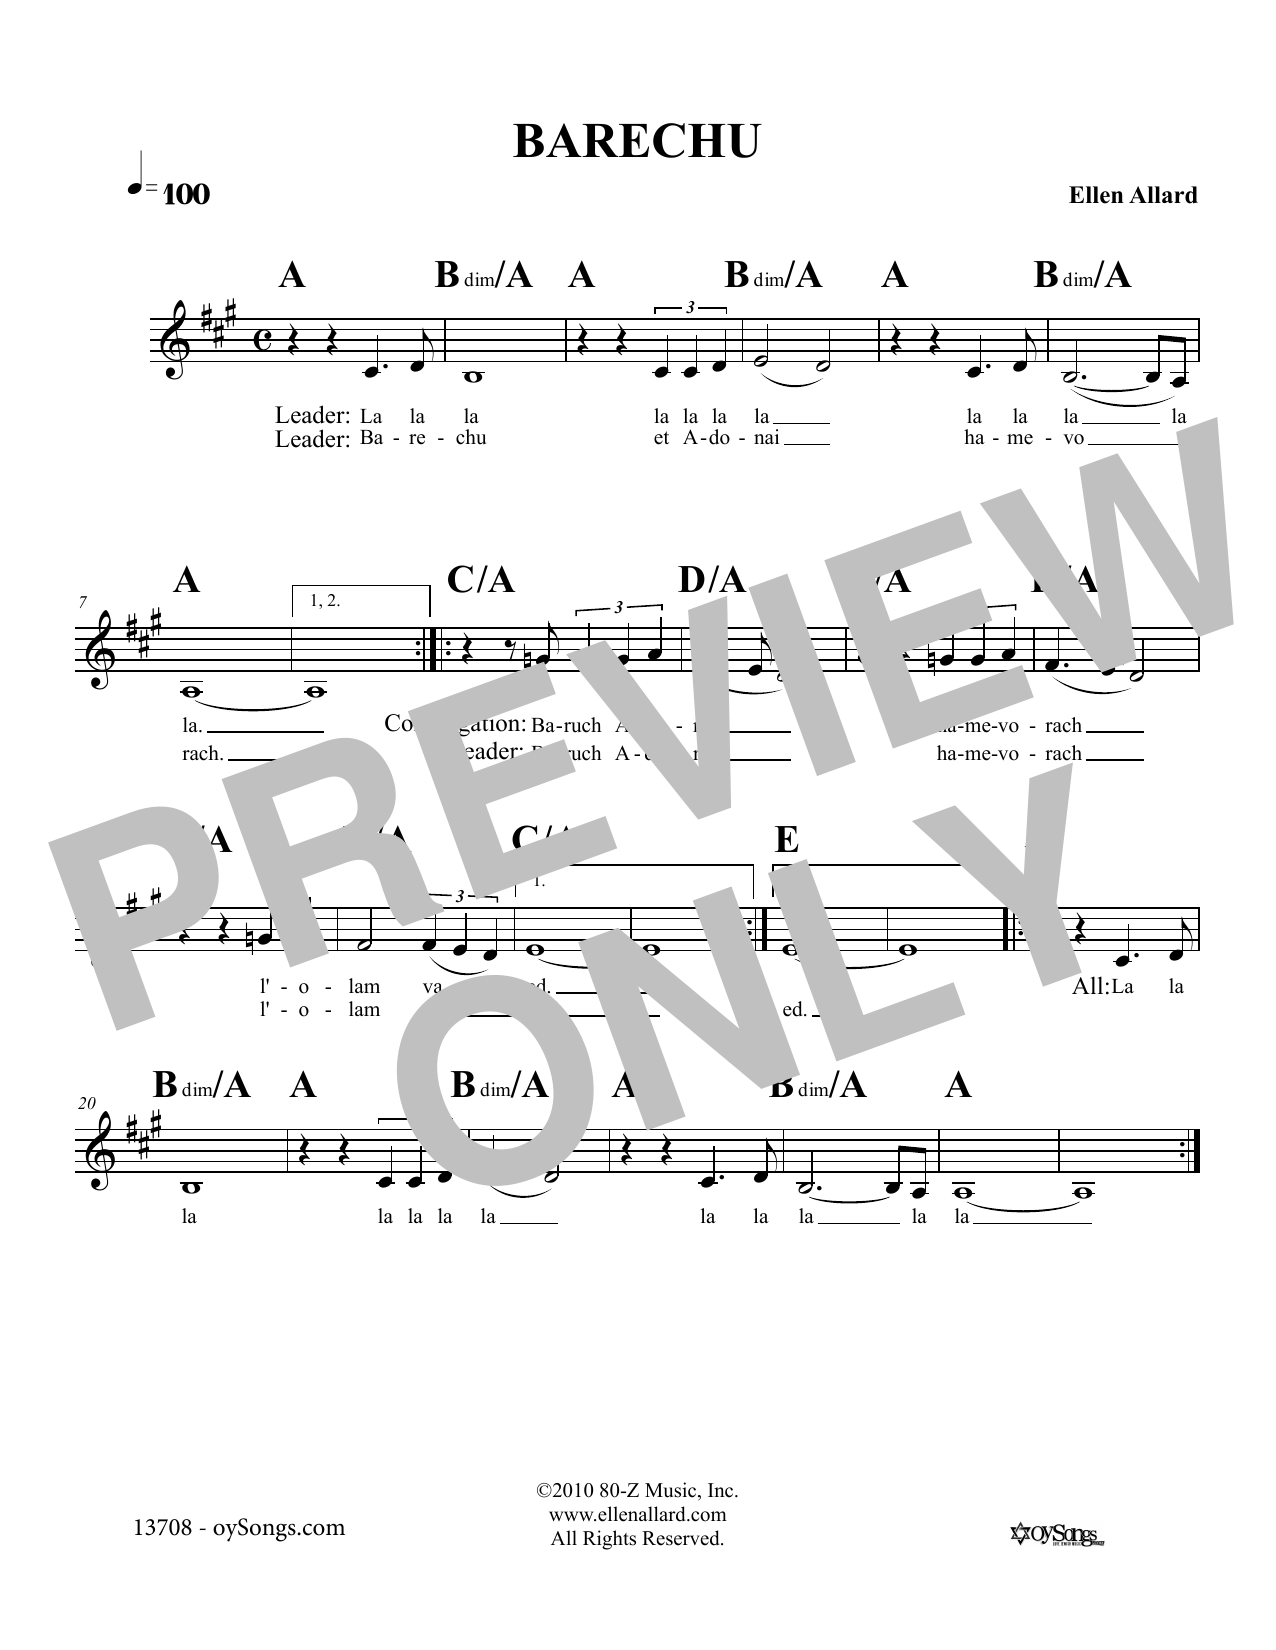 Ellen Allard Barechu sheet music notes and chords arranged for Lead Sheet / Fake Book